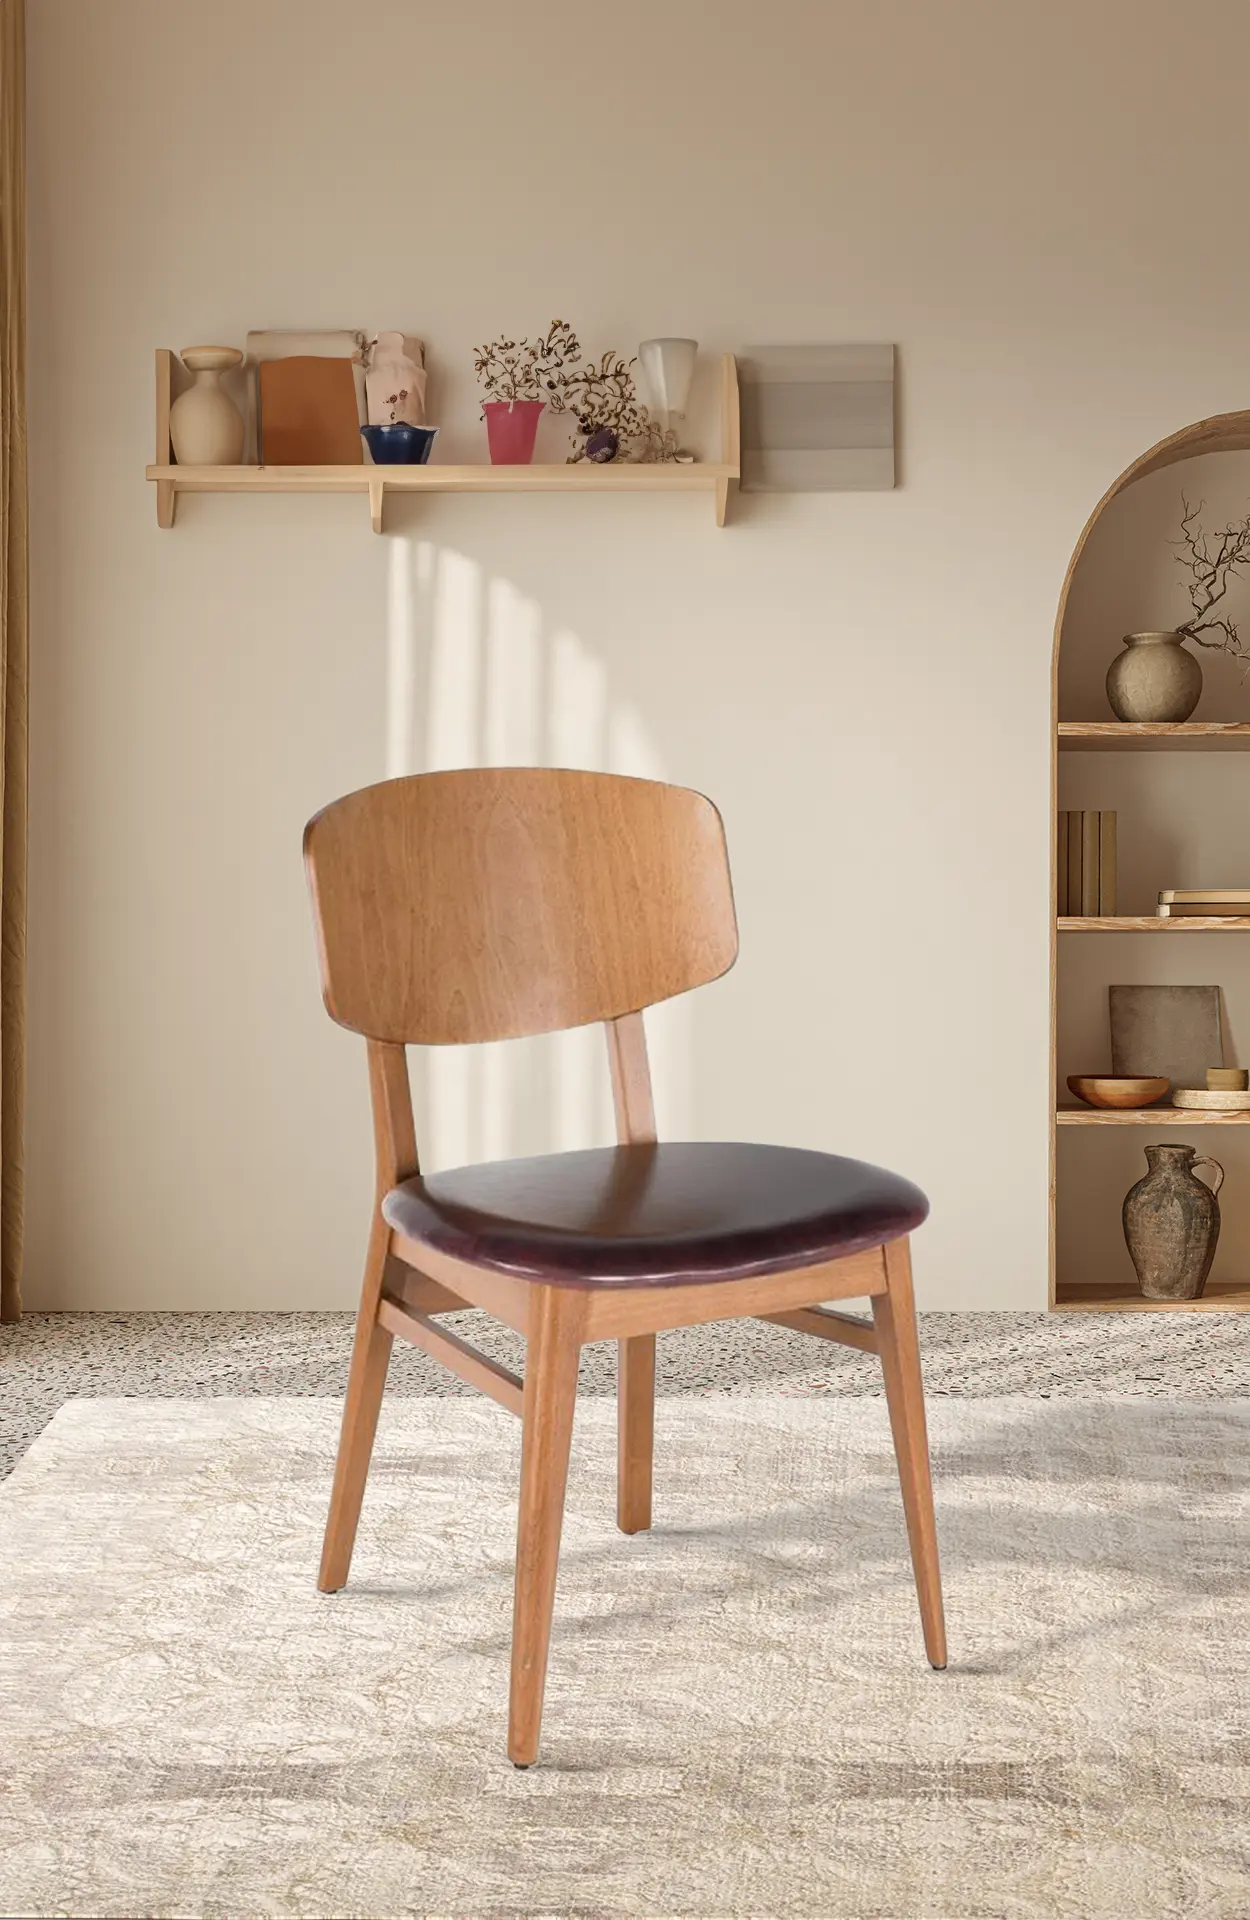 Edmonton Wooden Chair Modern Design Wooden Frame Dining Room Leather Timeless